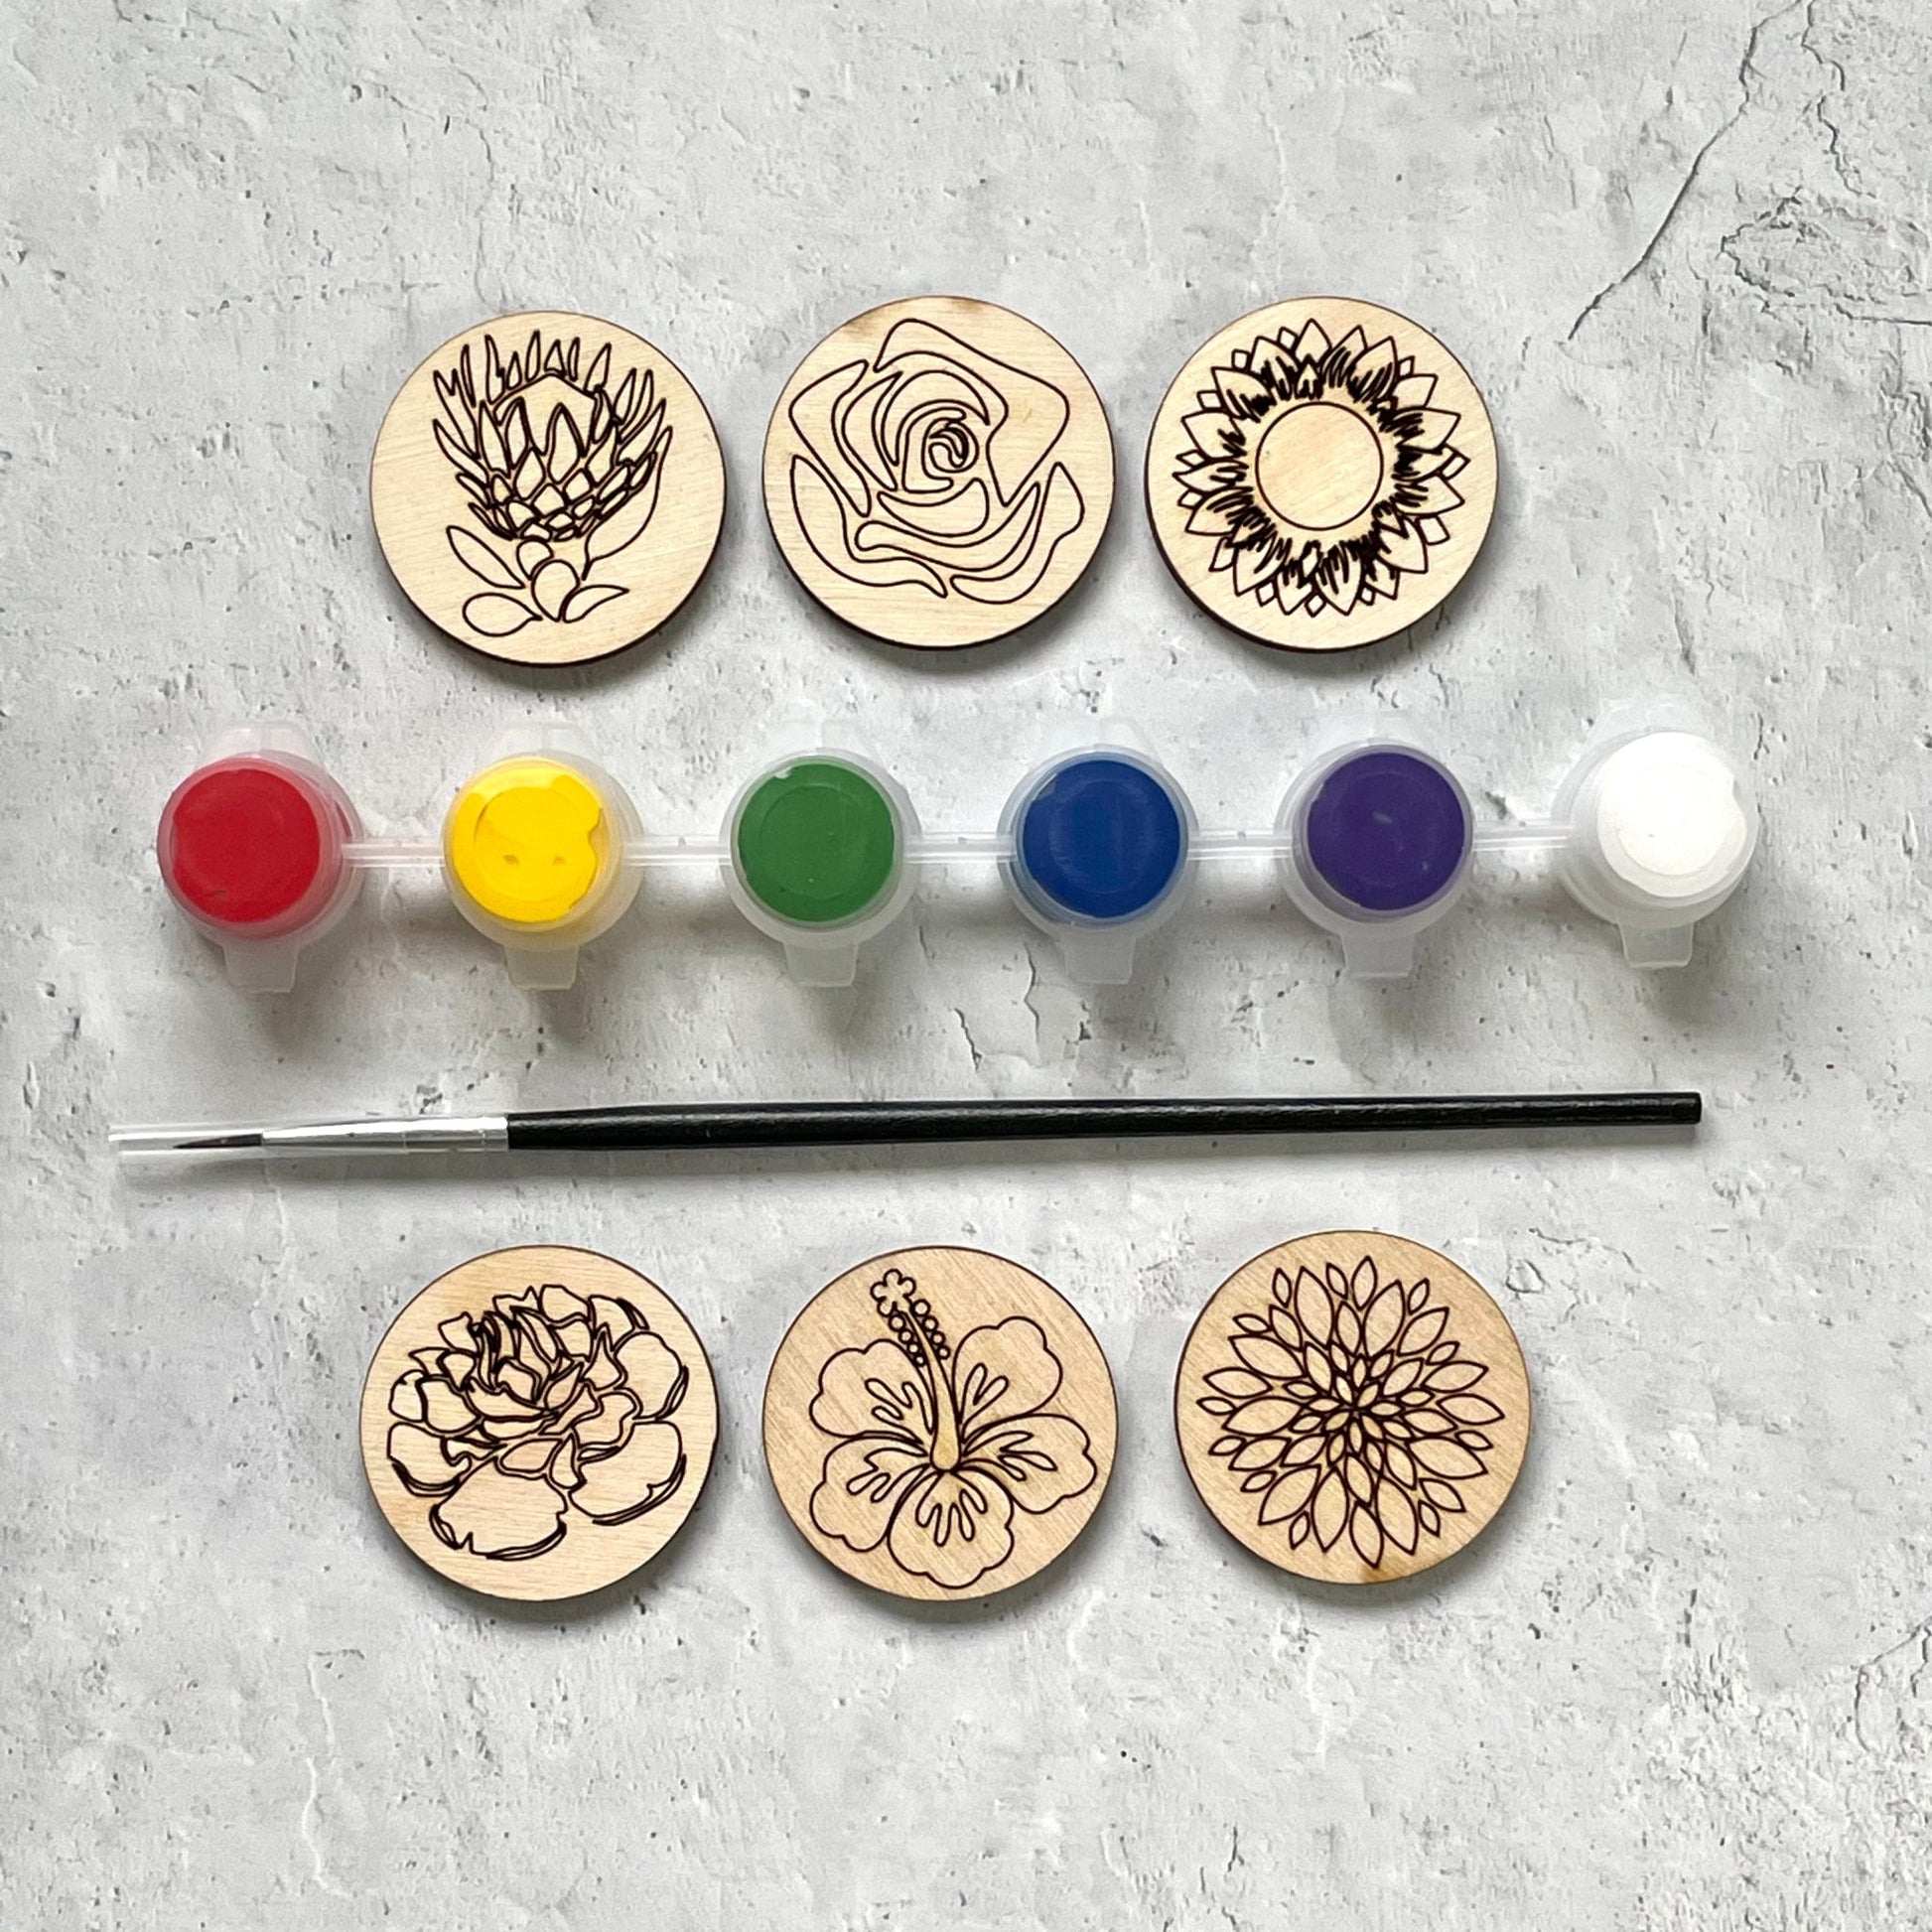 DIY Magnets - Make your own magnets flower kit - by LeeMo Designs in Bend, Oregon